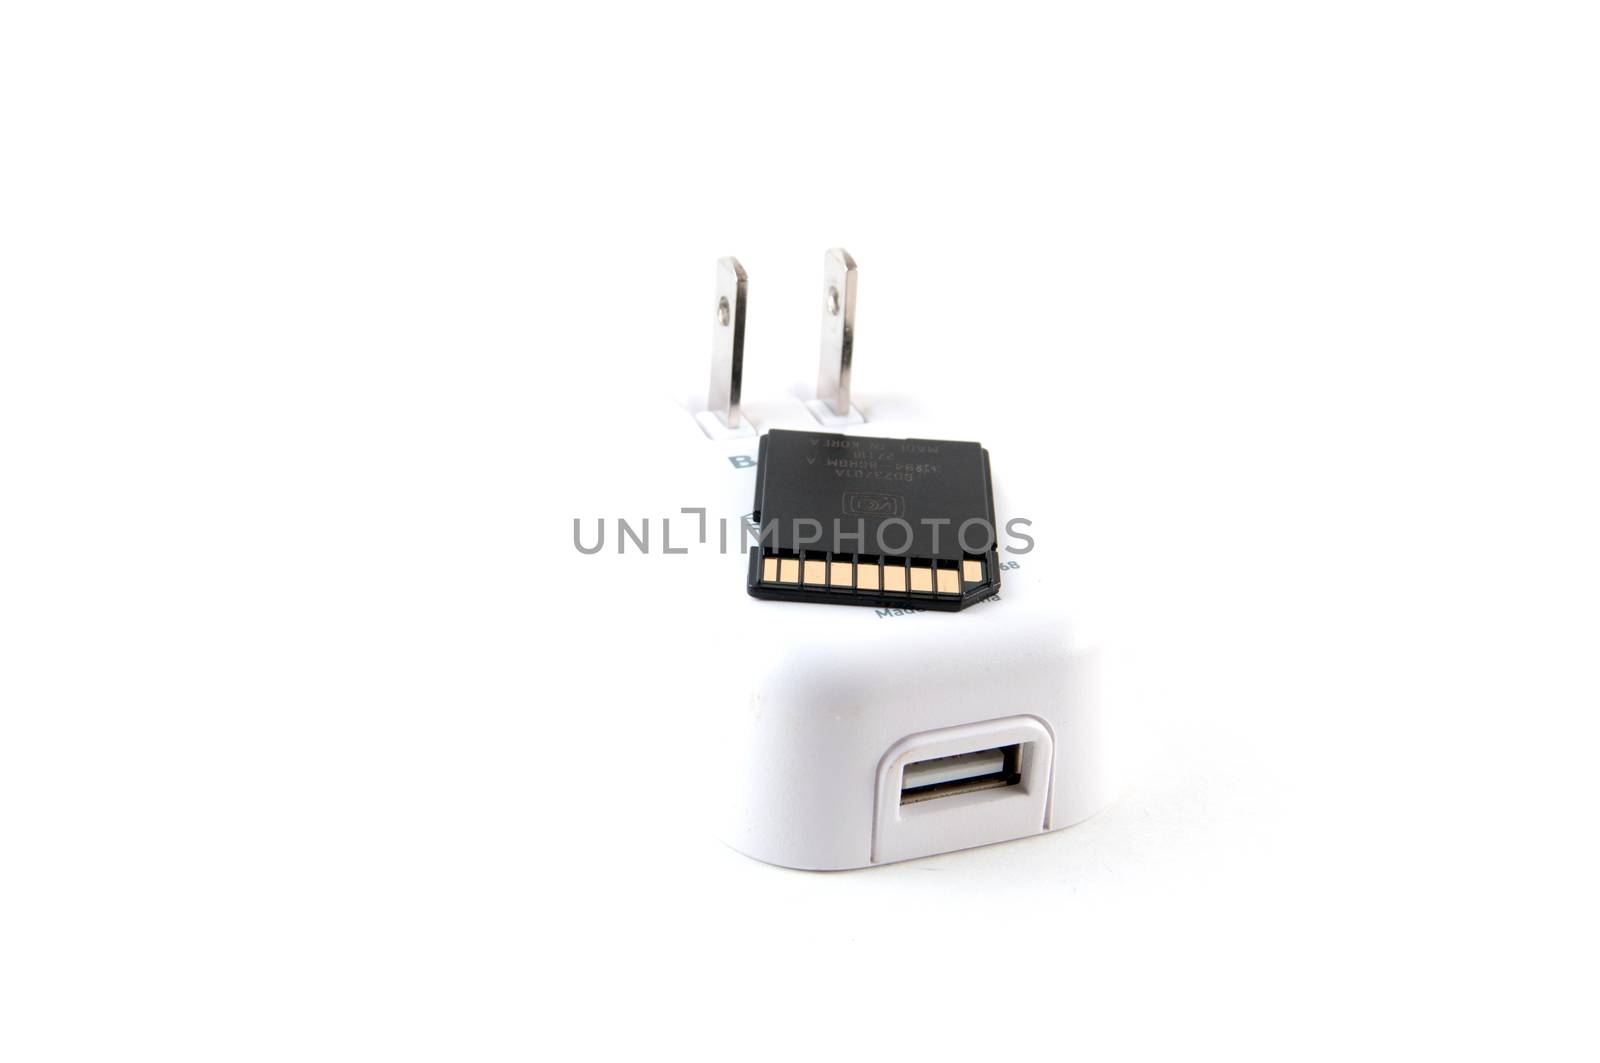 Wall plug USB and an SD memory card by daoleduc